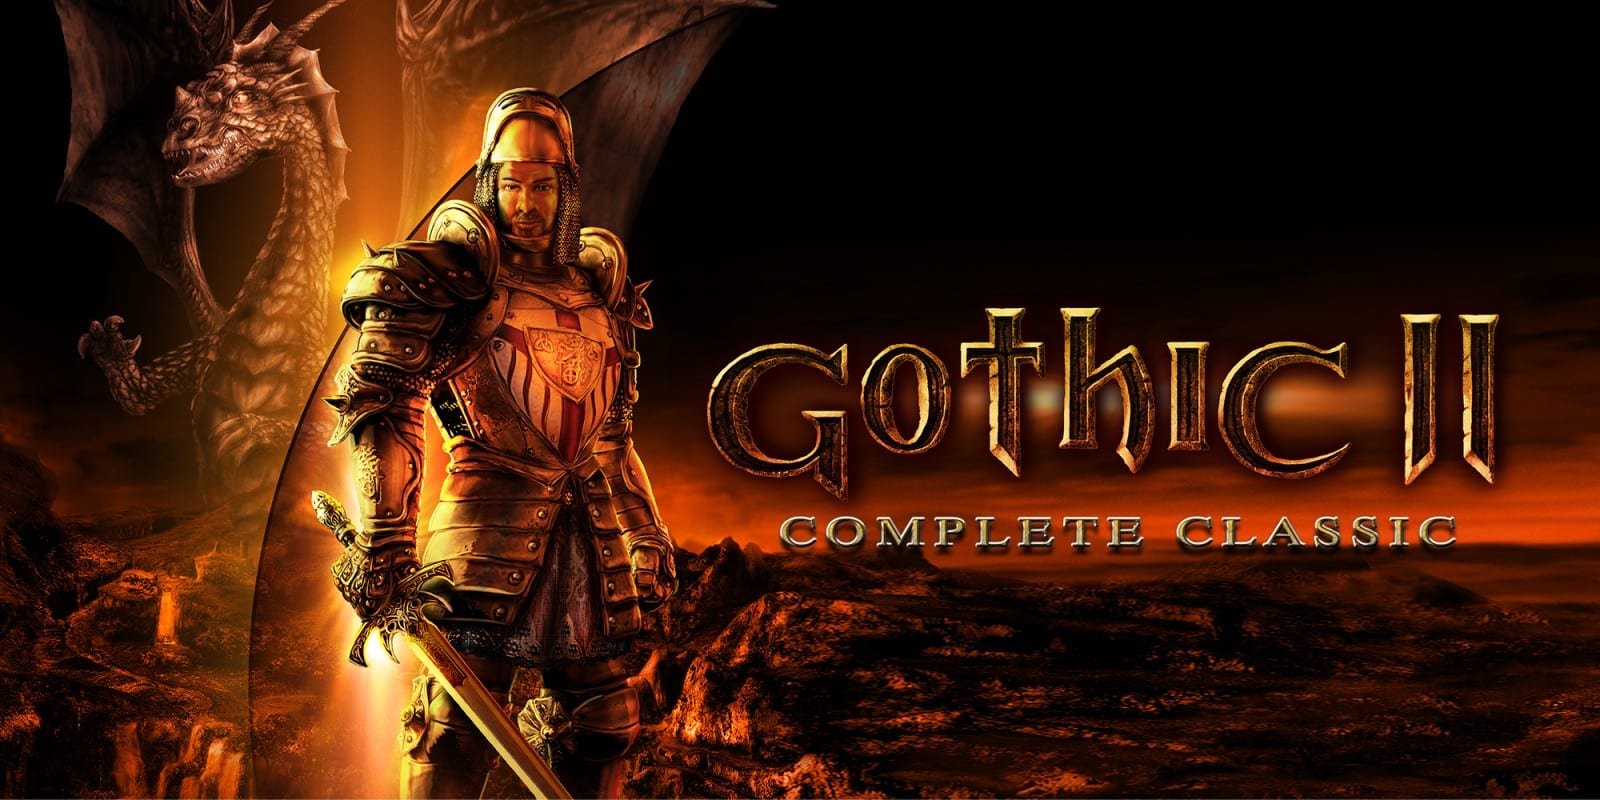 Gothic II Complete Classic sort aujourd’hui sur Nintendo Switch !